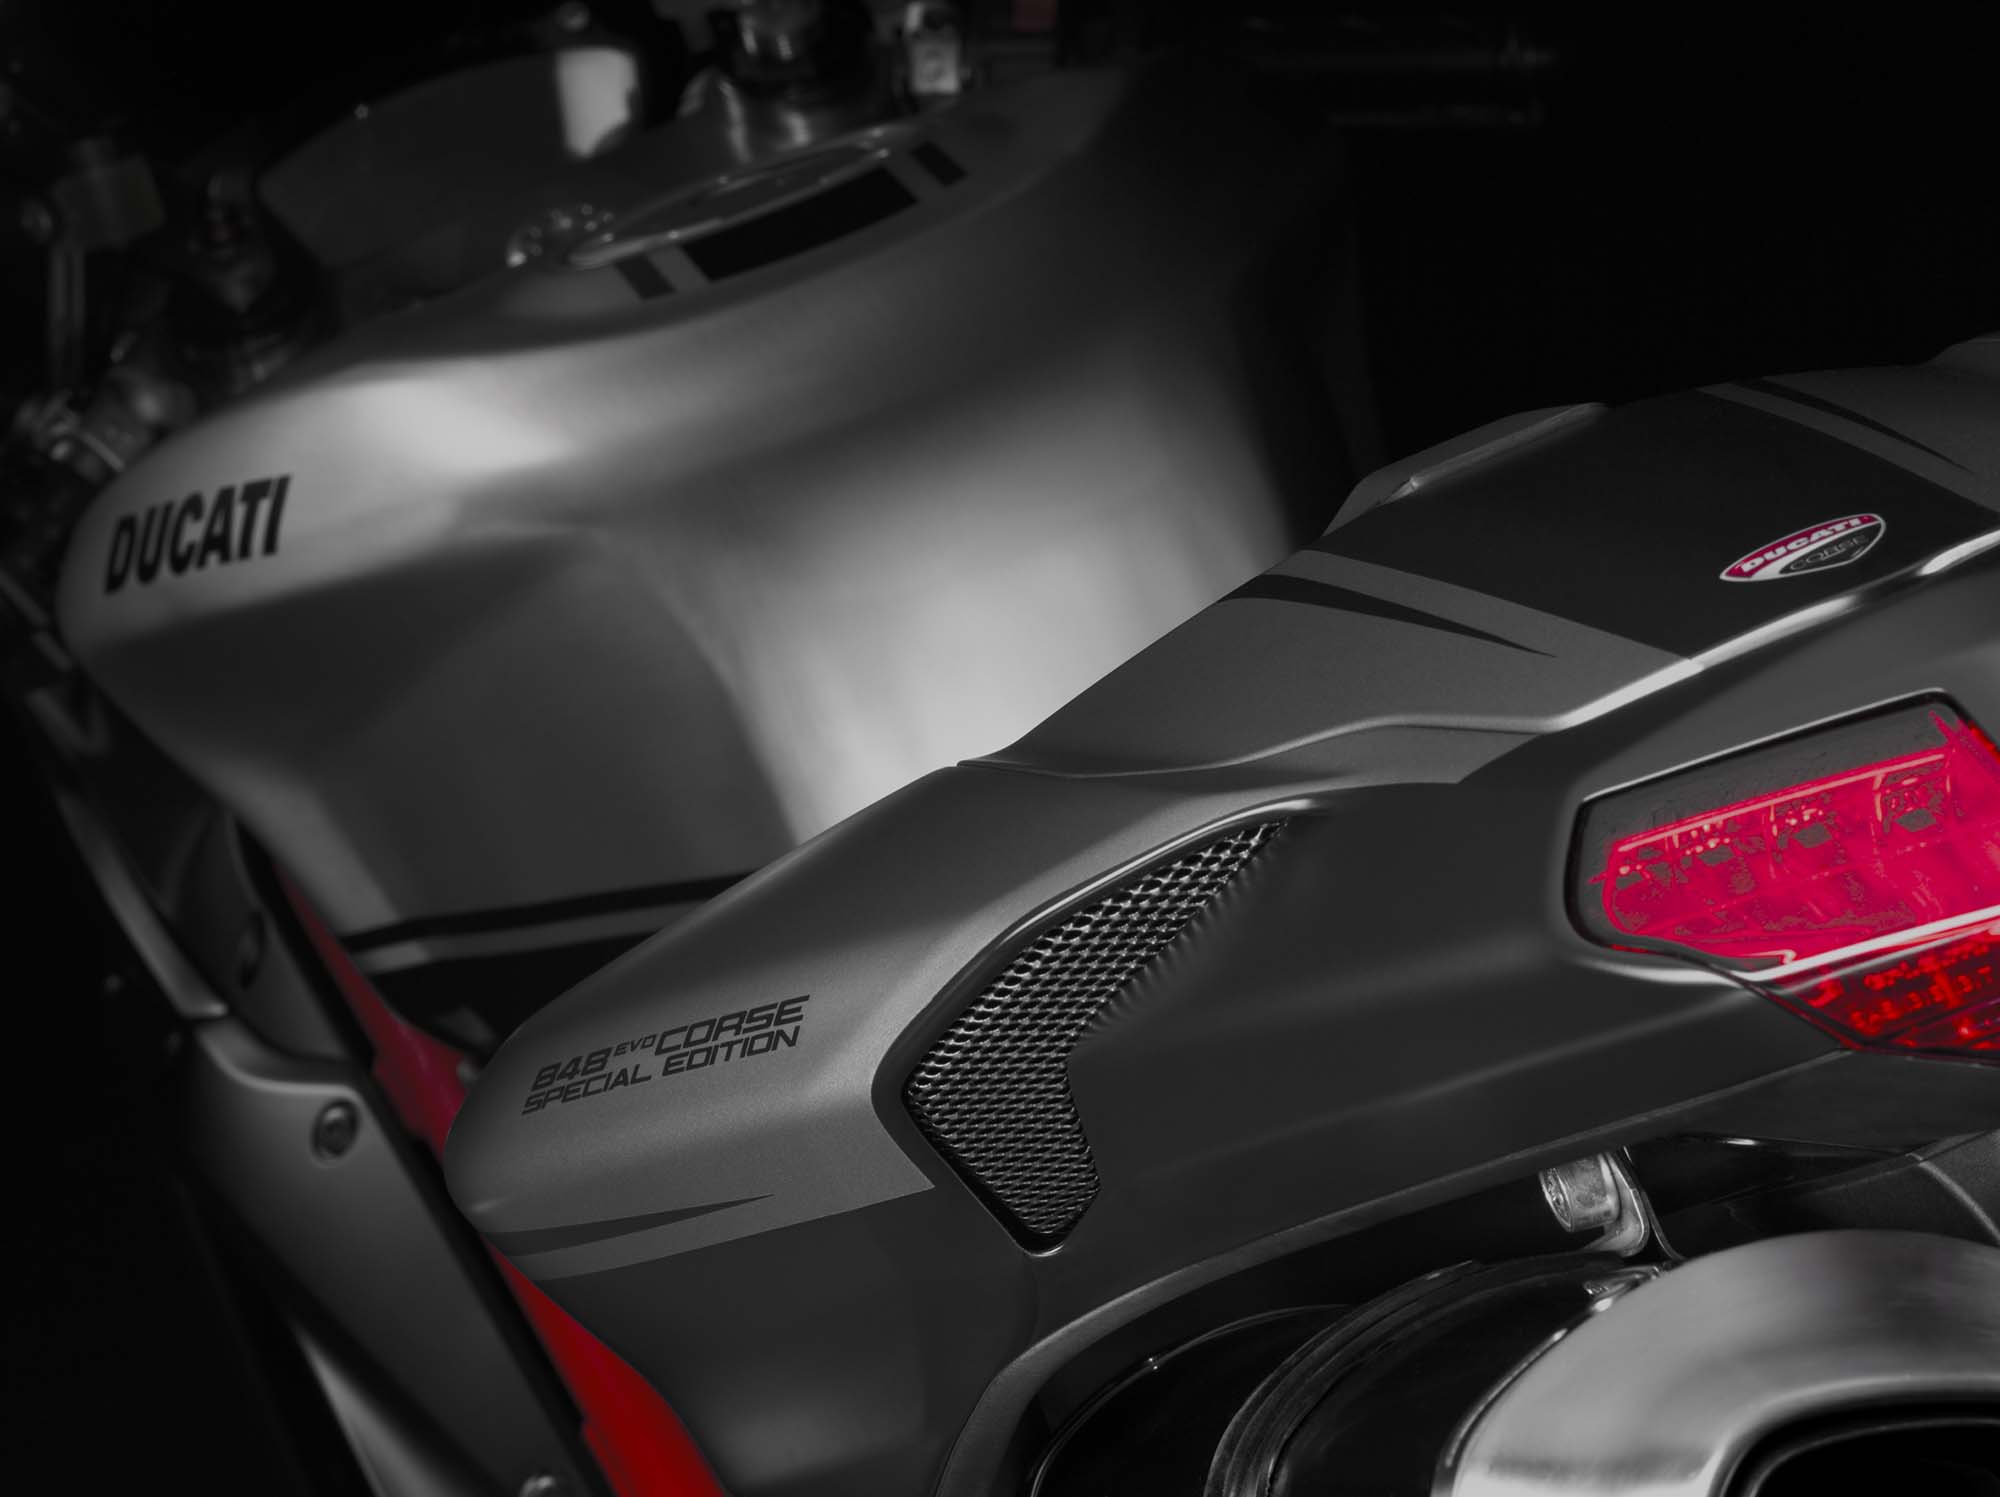 Ducati Superbike 848 Evo Wallpapers